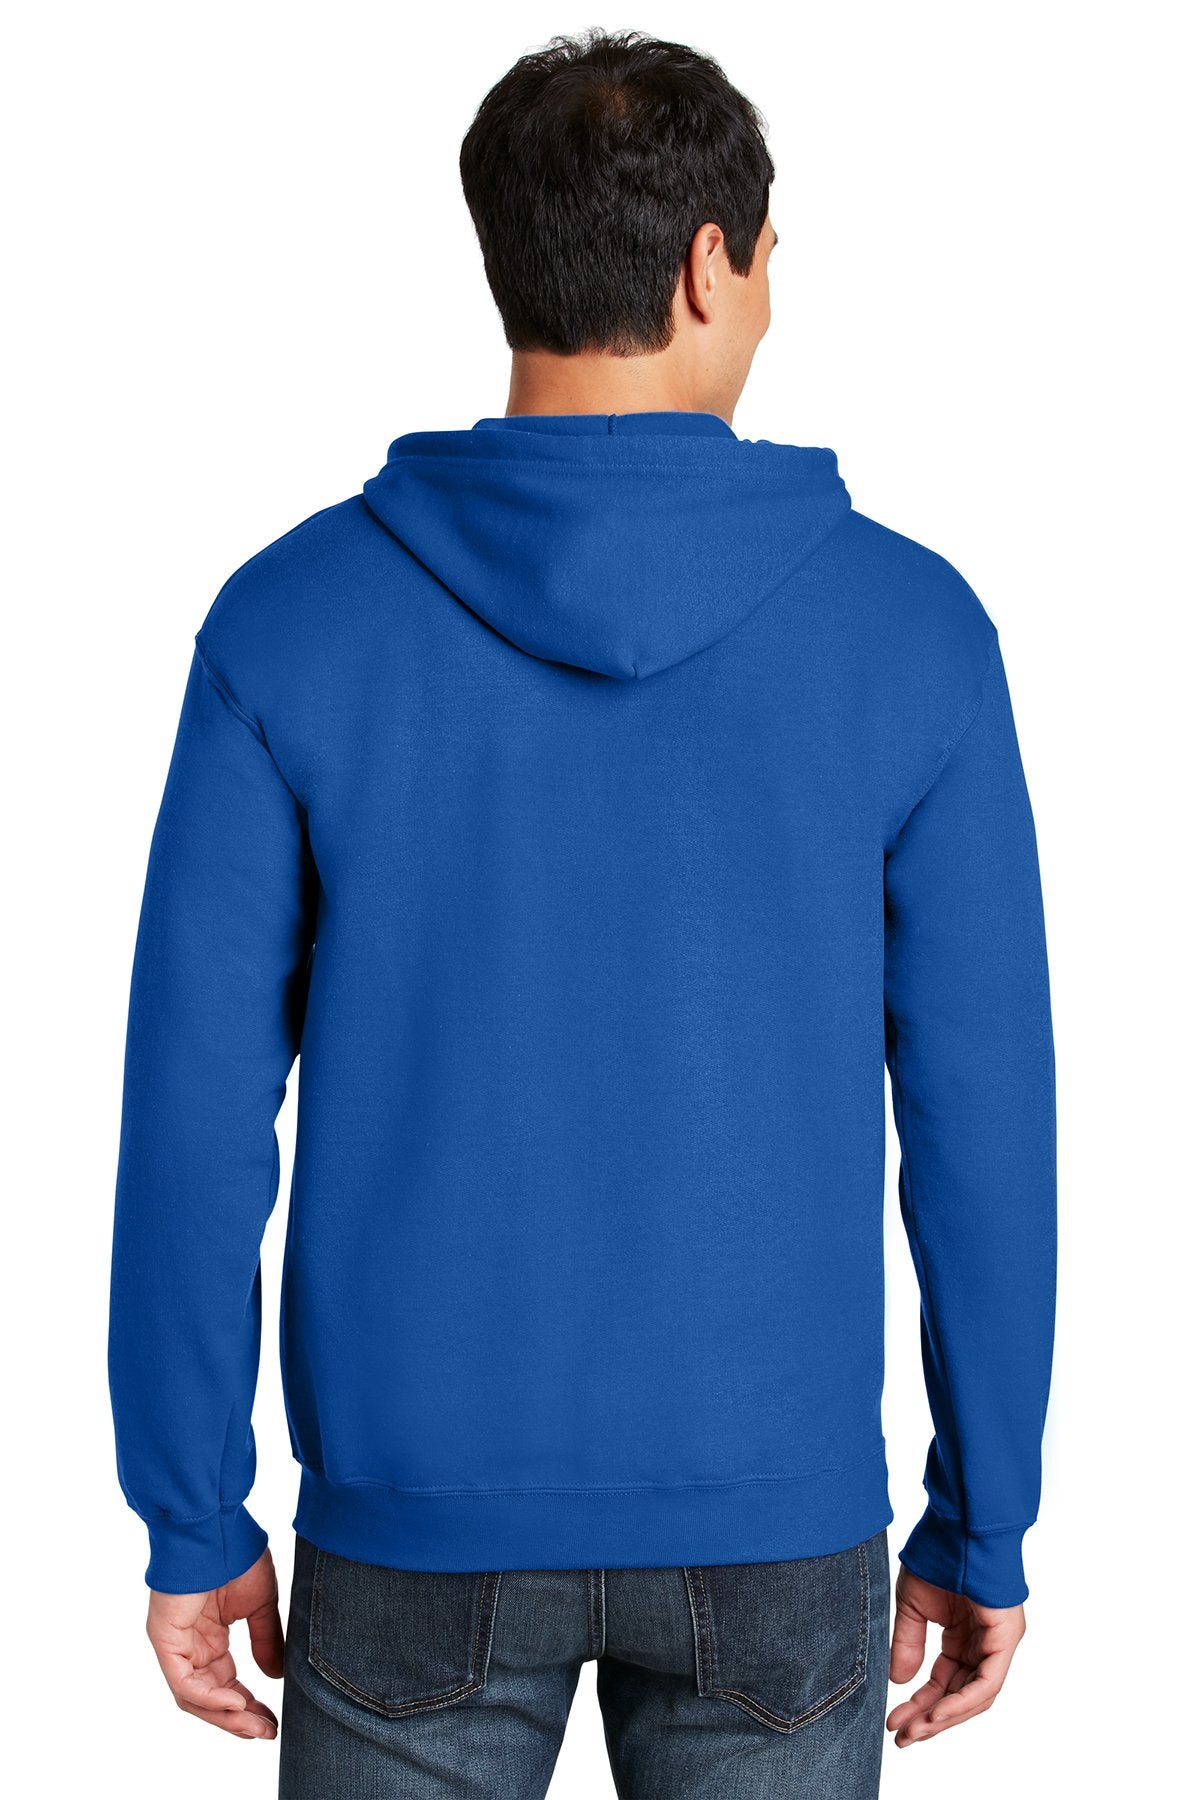 Gildan Heavy Blend Full Zip Hooded Sweatshirt Royal